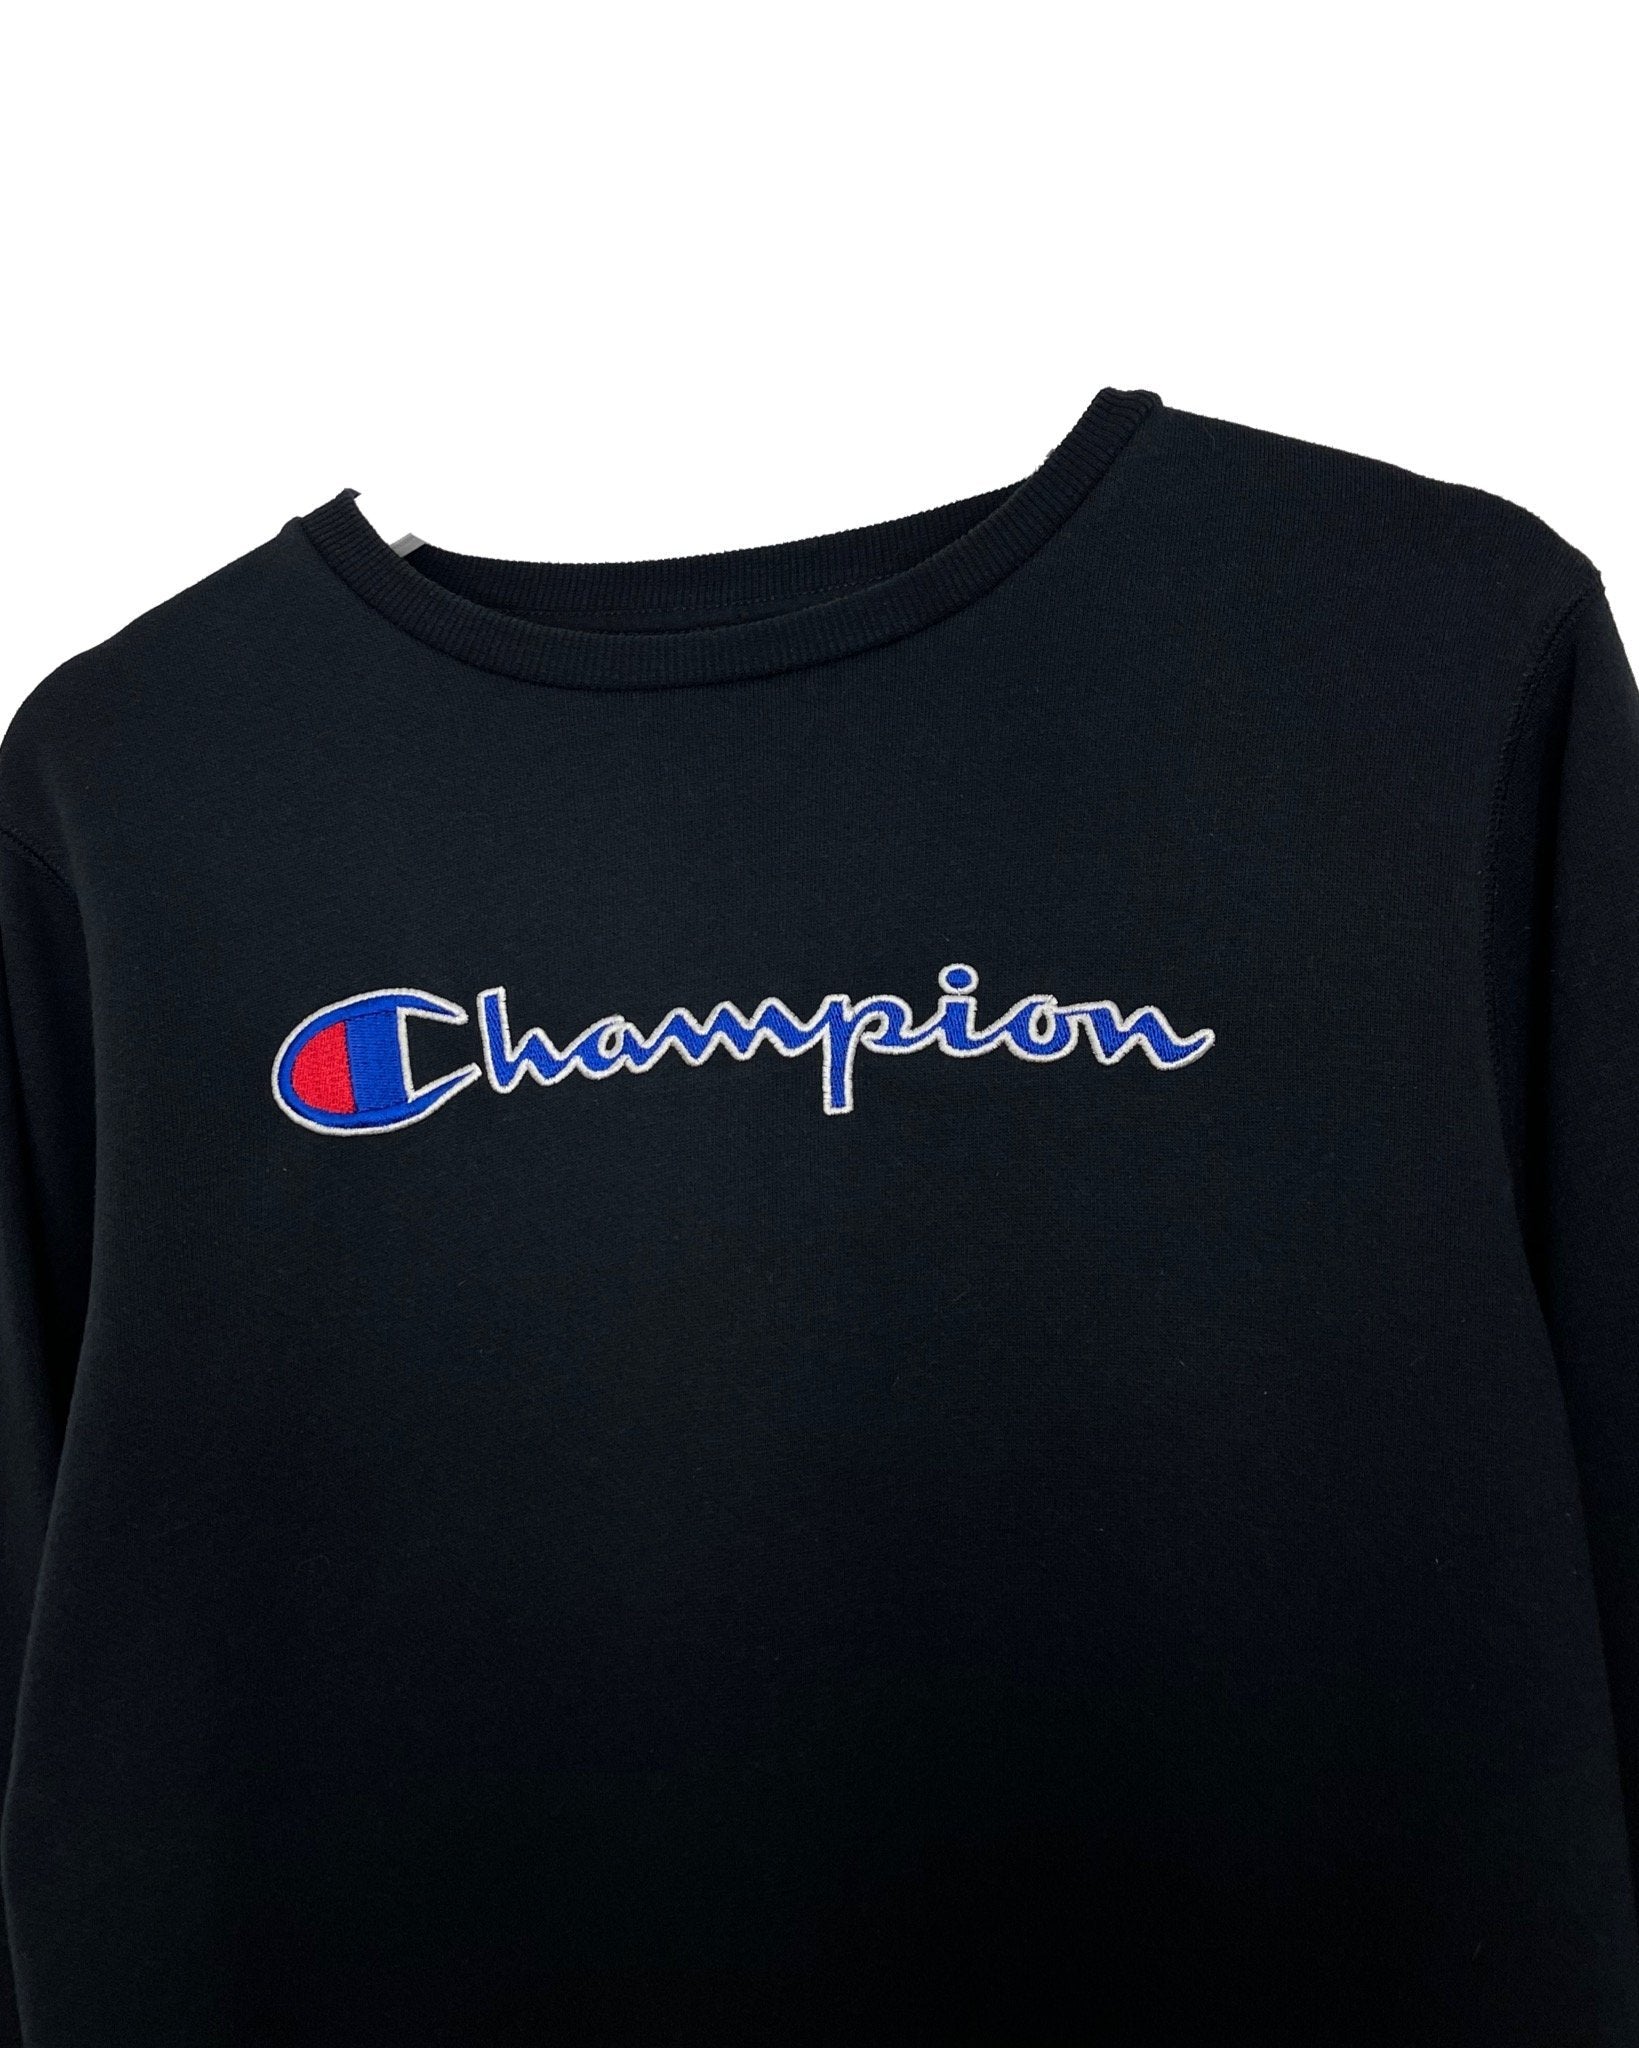  Sweatshirt Champion Sweat - XS - PLOMOSTORE